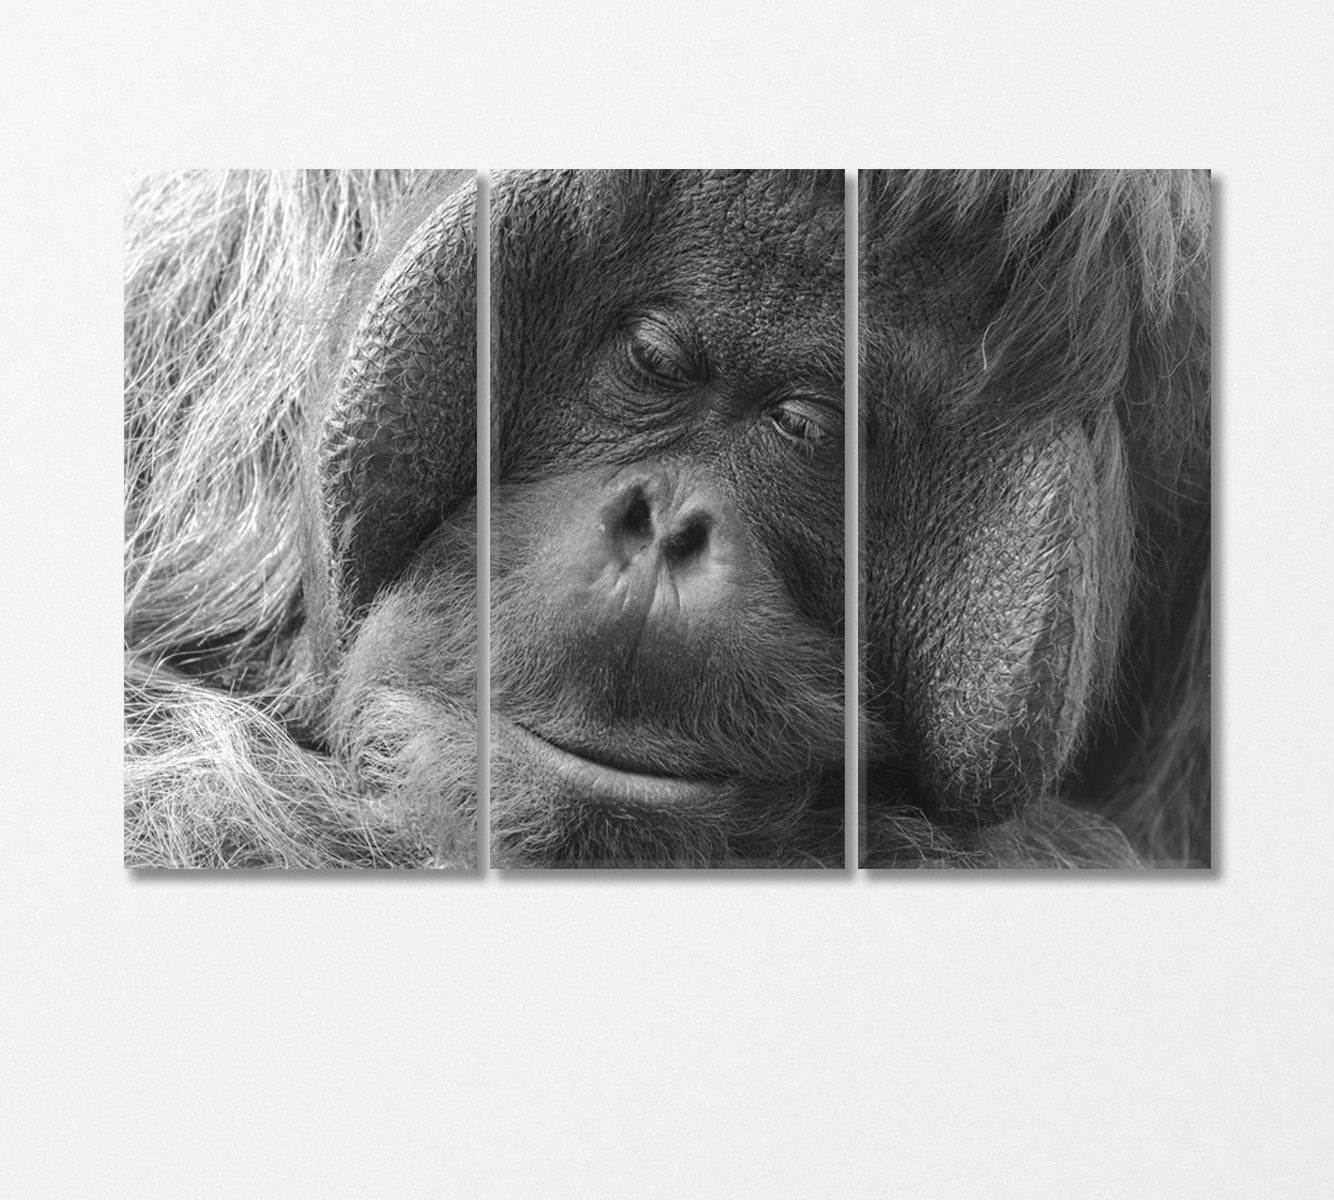 Orangutan in Black and White Canvas Print-Canvas Print-CetArt-3 Panels-36x24 inches-CetArt